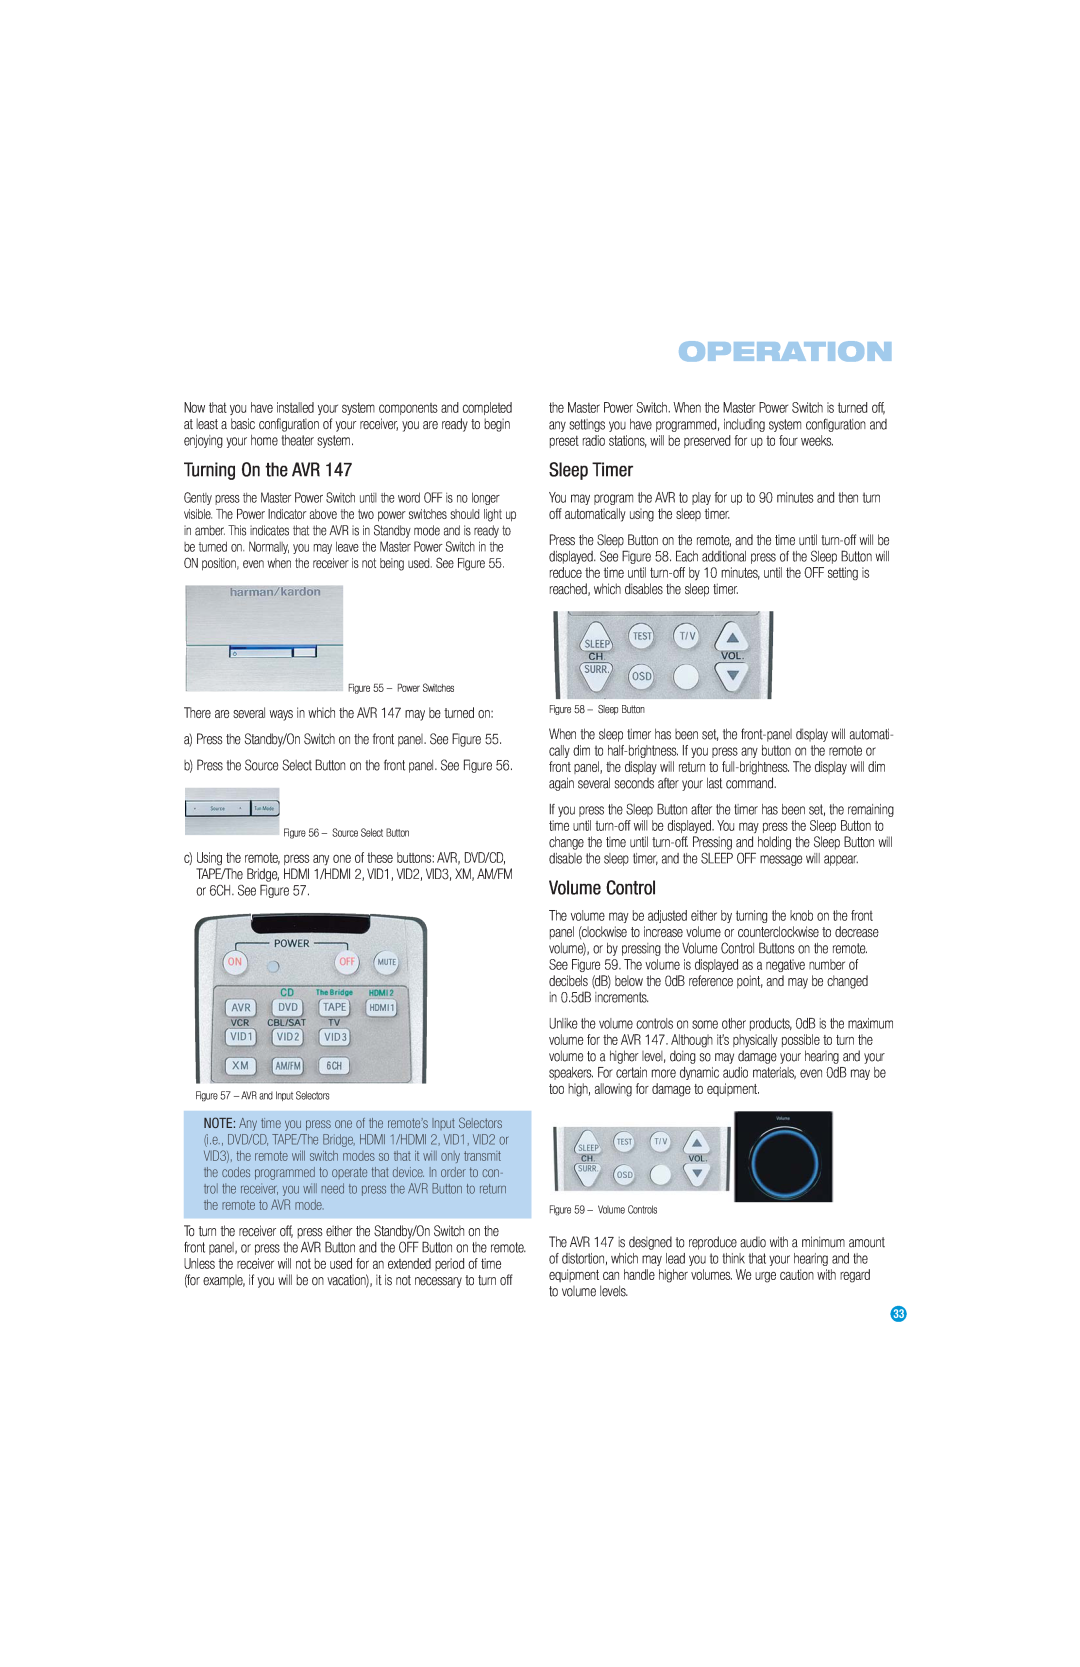 Harman-Kardon AVR 147 owner manual Operation, Turning On the AVR, Sleep Timer, Volume Control 